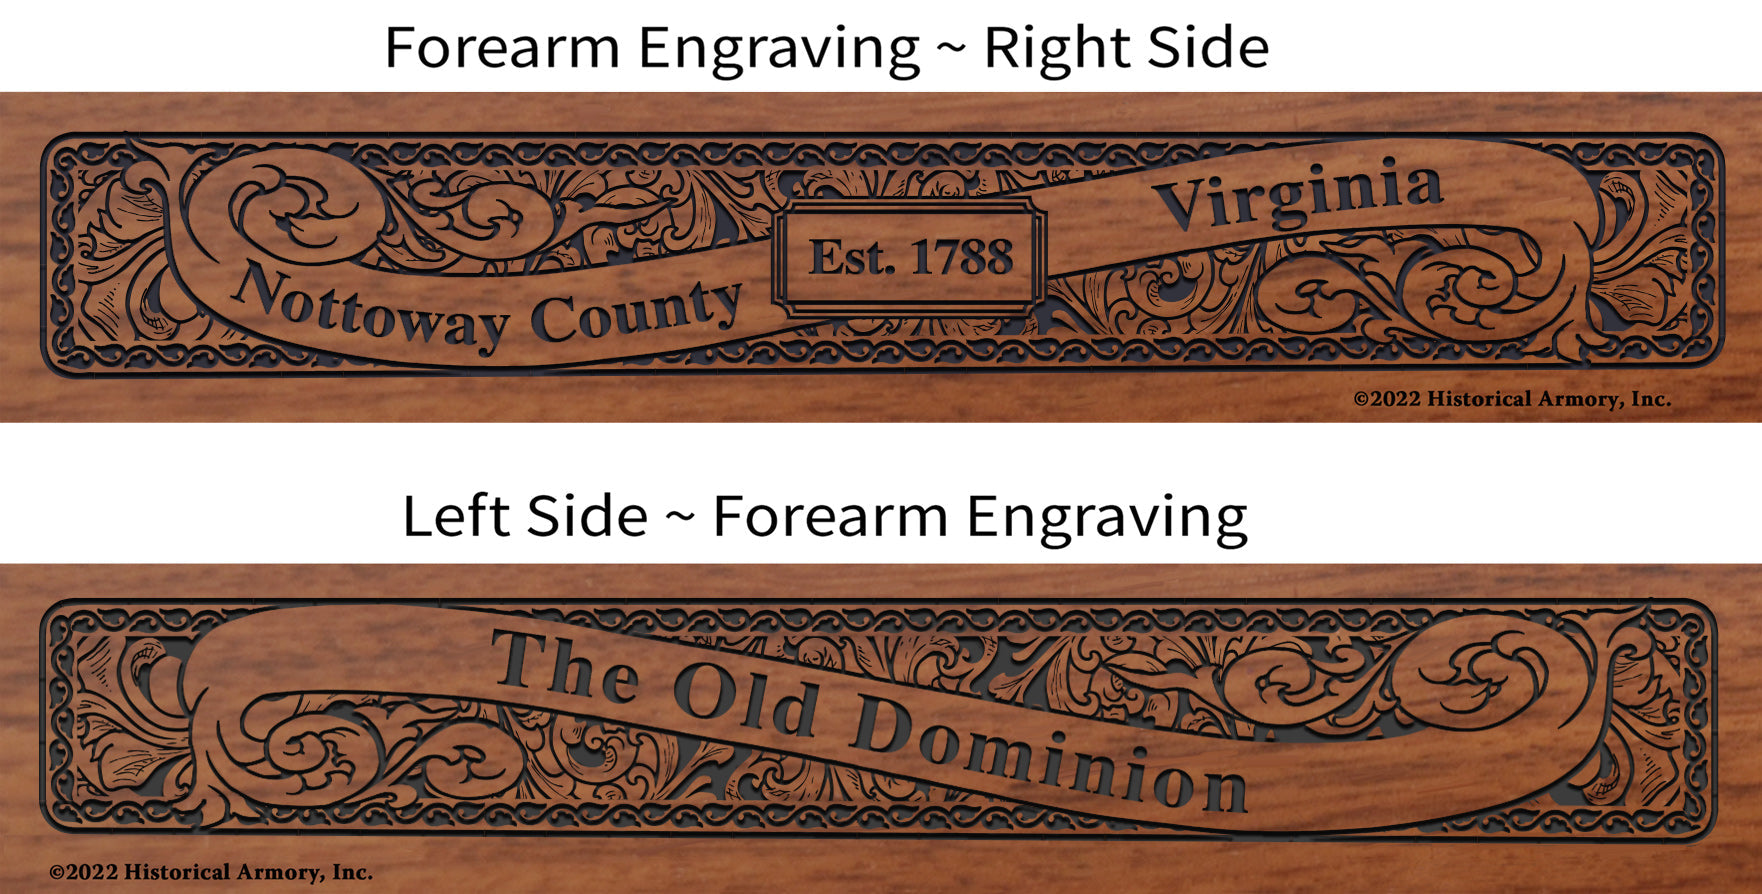 Nottoway County Virginia Engraved Rifle Forearm